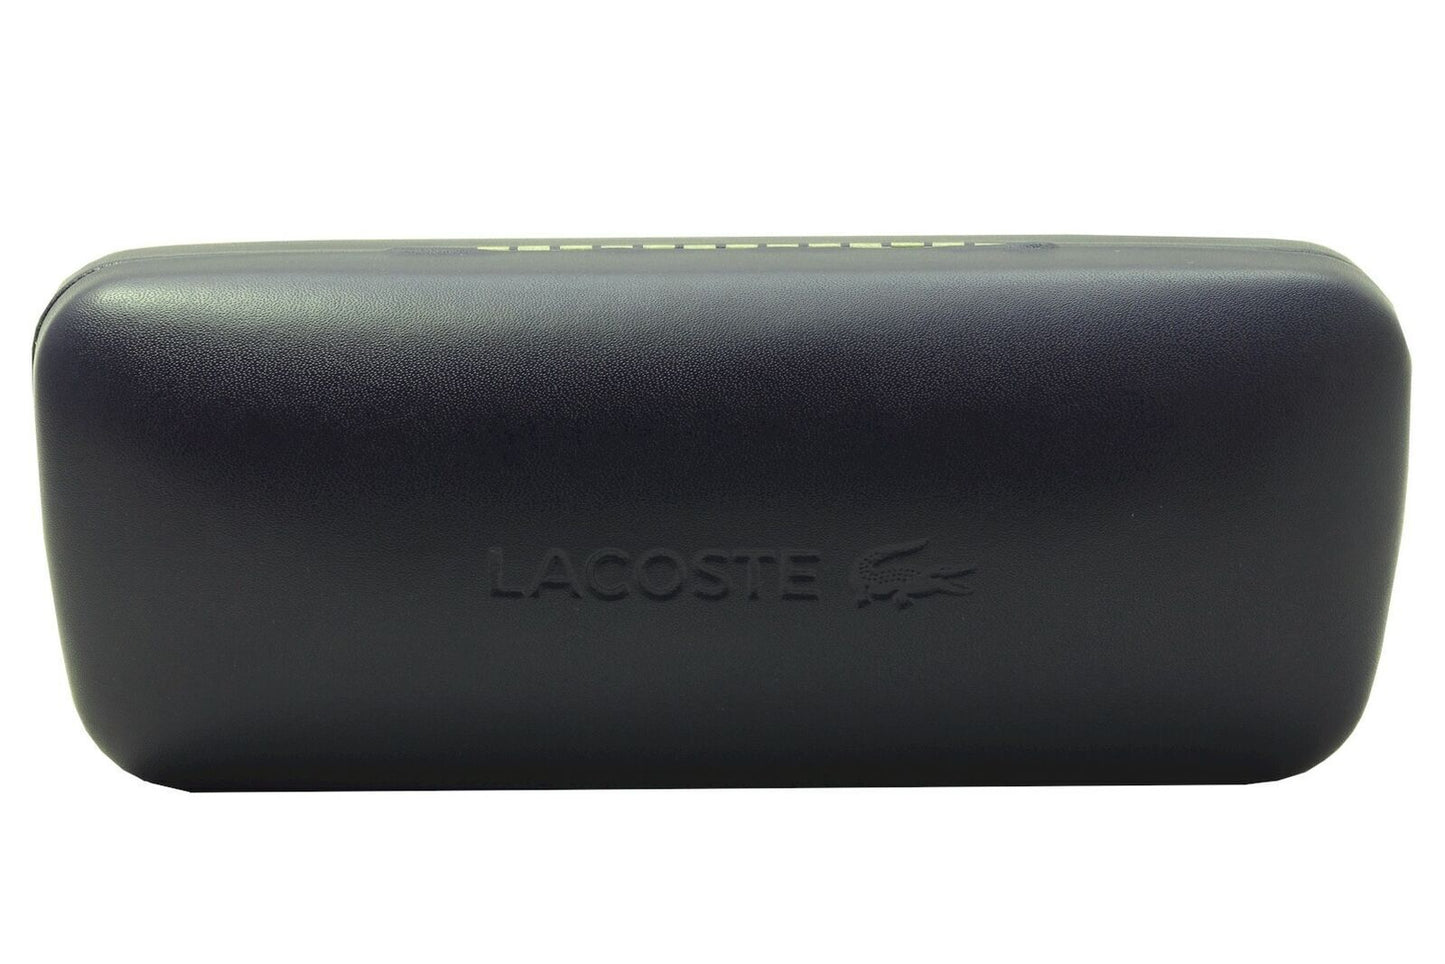 Lacoste L2880-315-5419 54mm New Eyeglasses